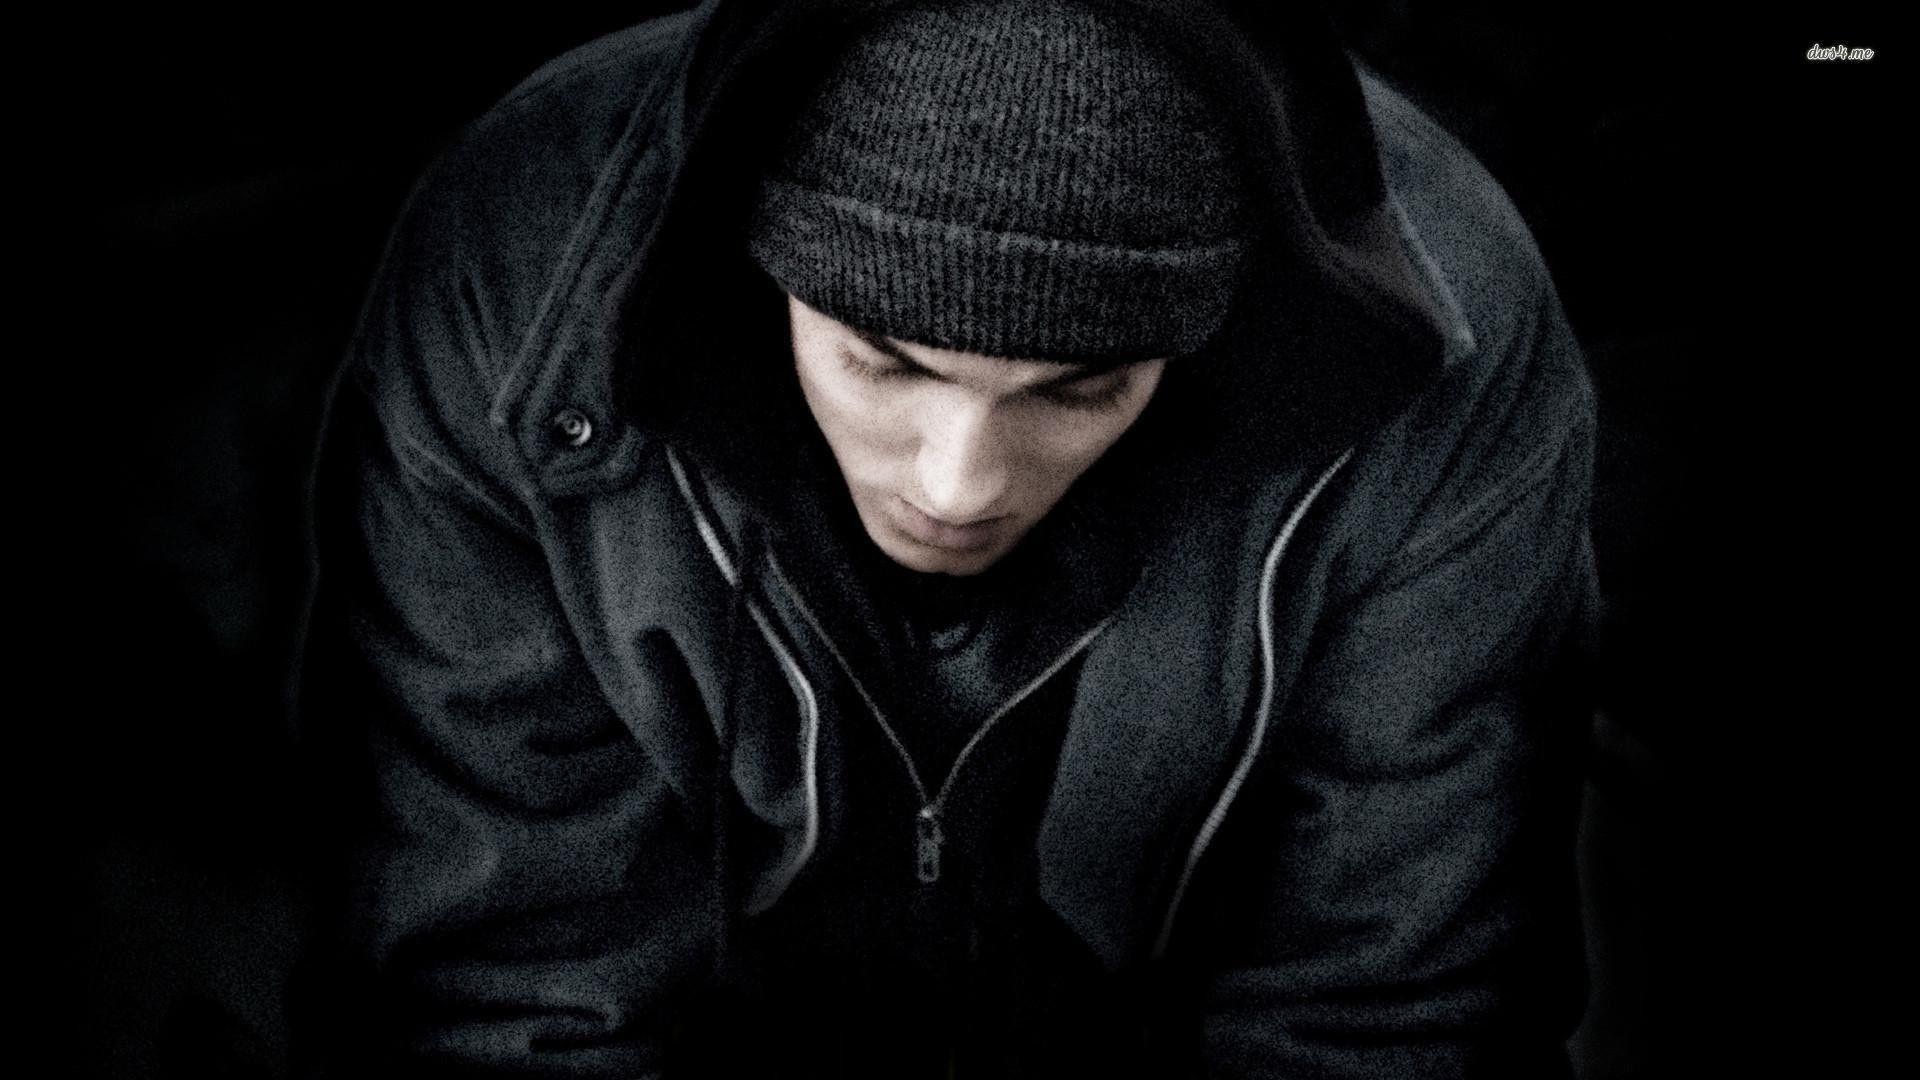 Eminem Phone Wallpaper background picture